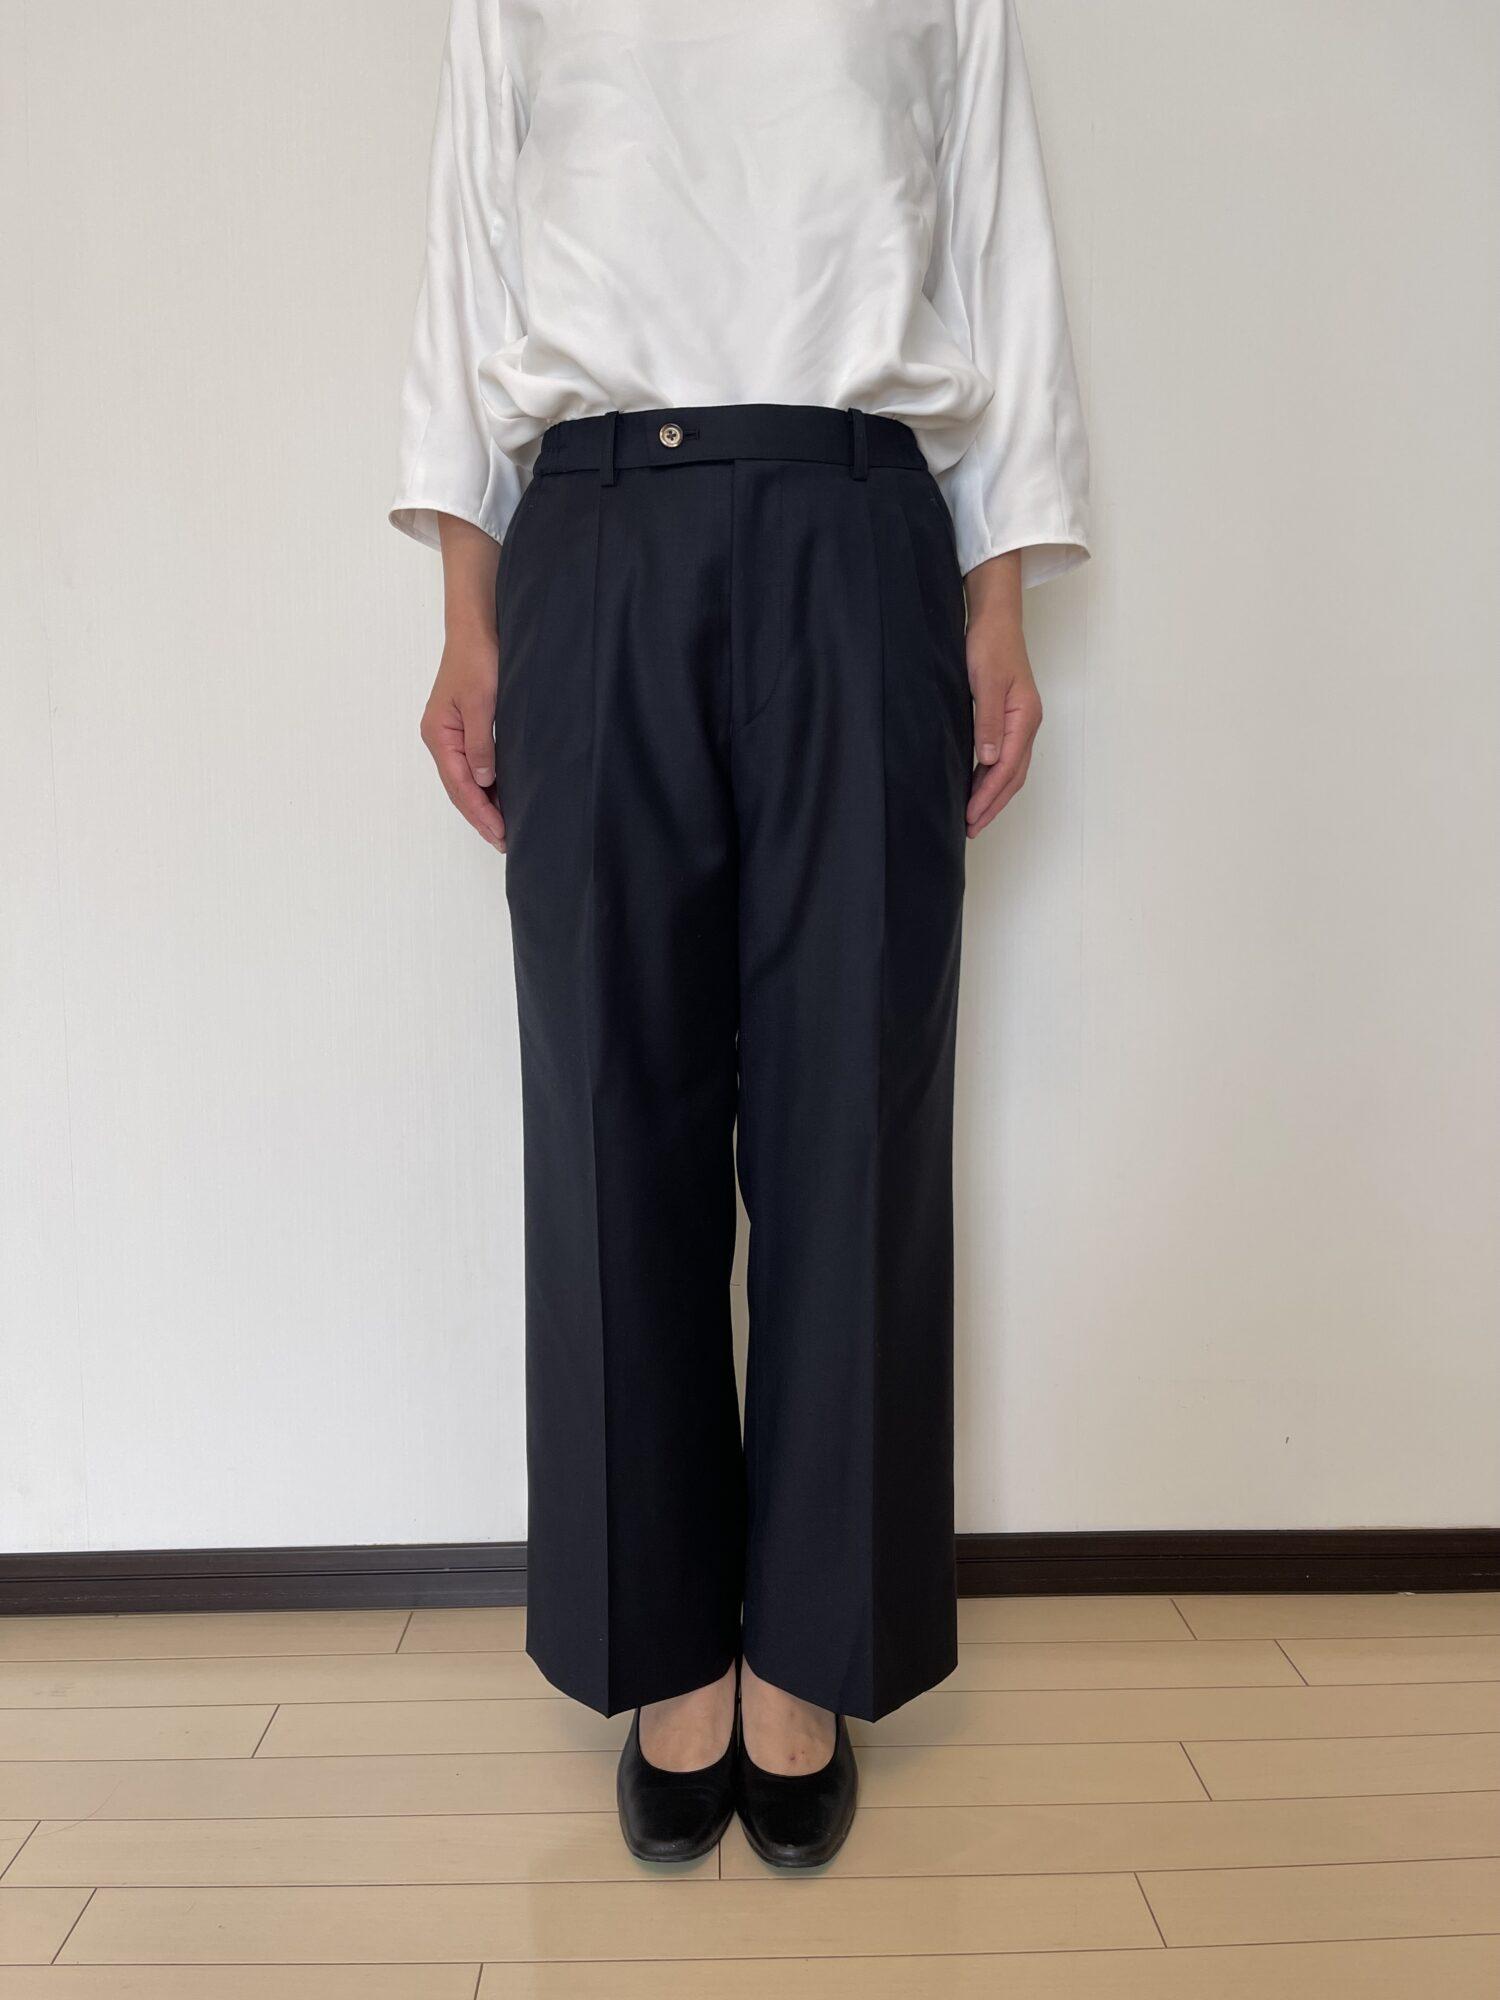 HANABISHI(花菱)のレディースオーダースーツ・パンツを着用